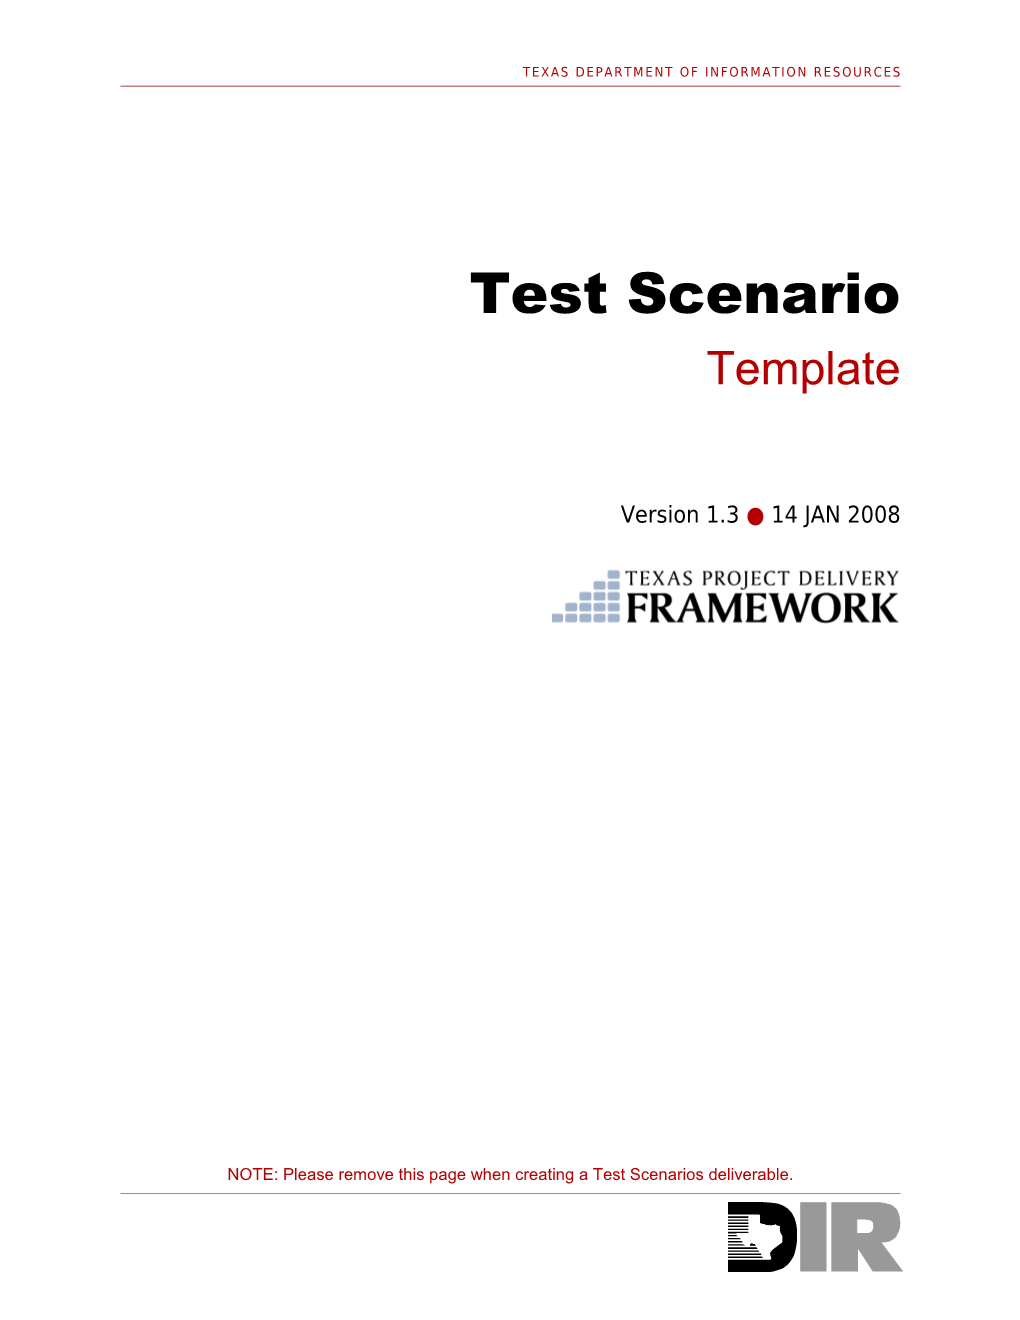 Test Scenario Template